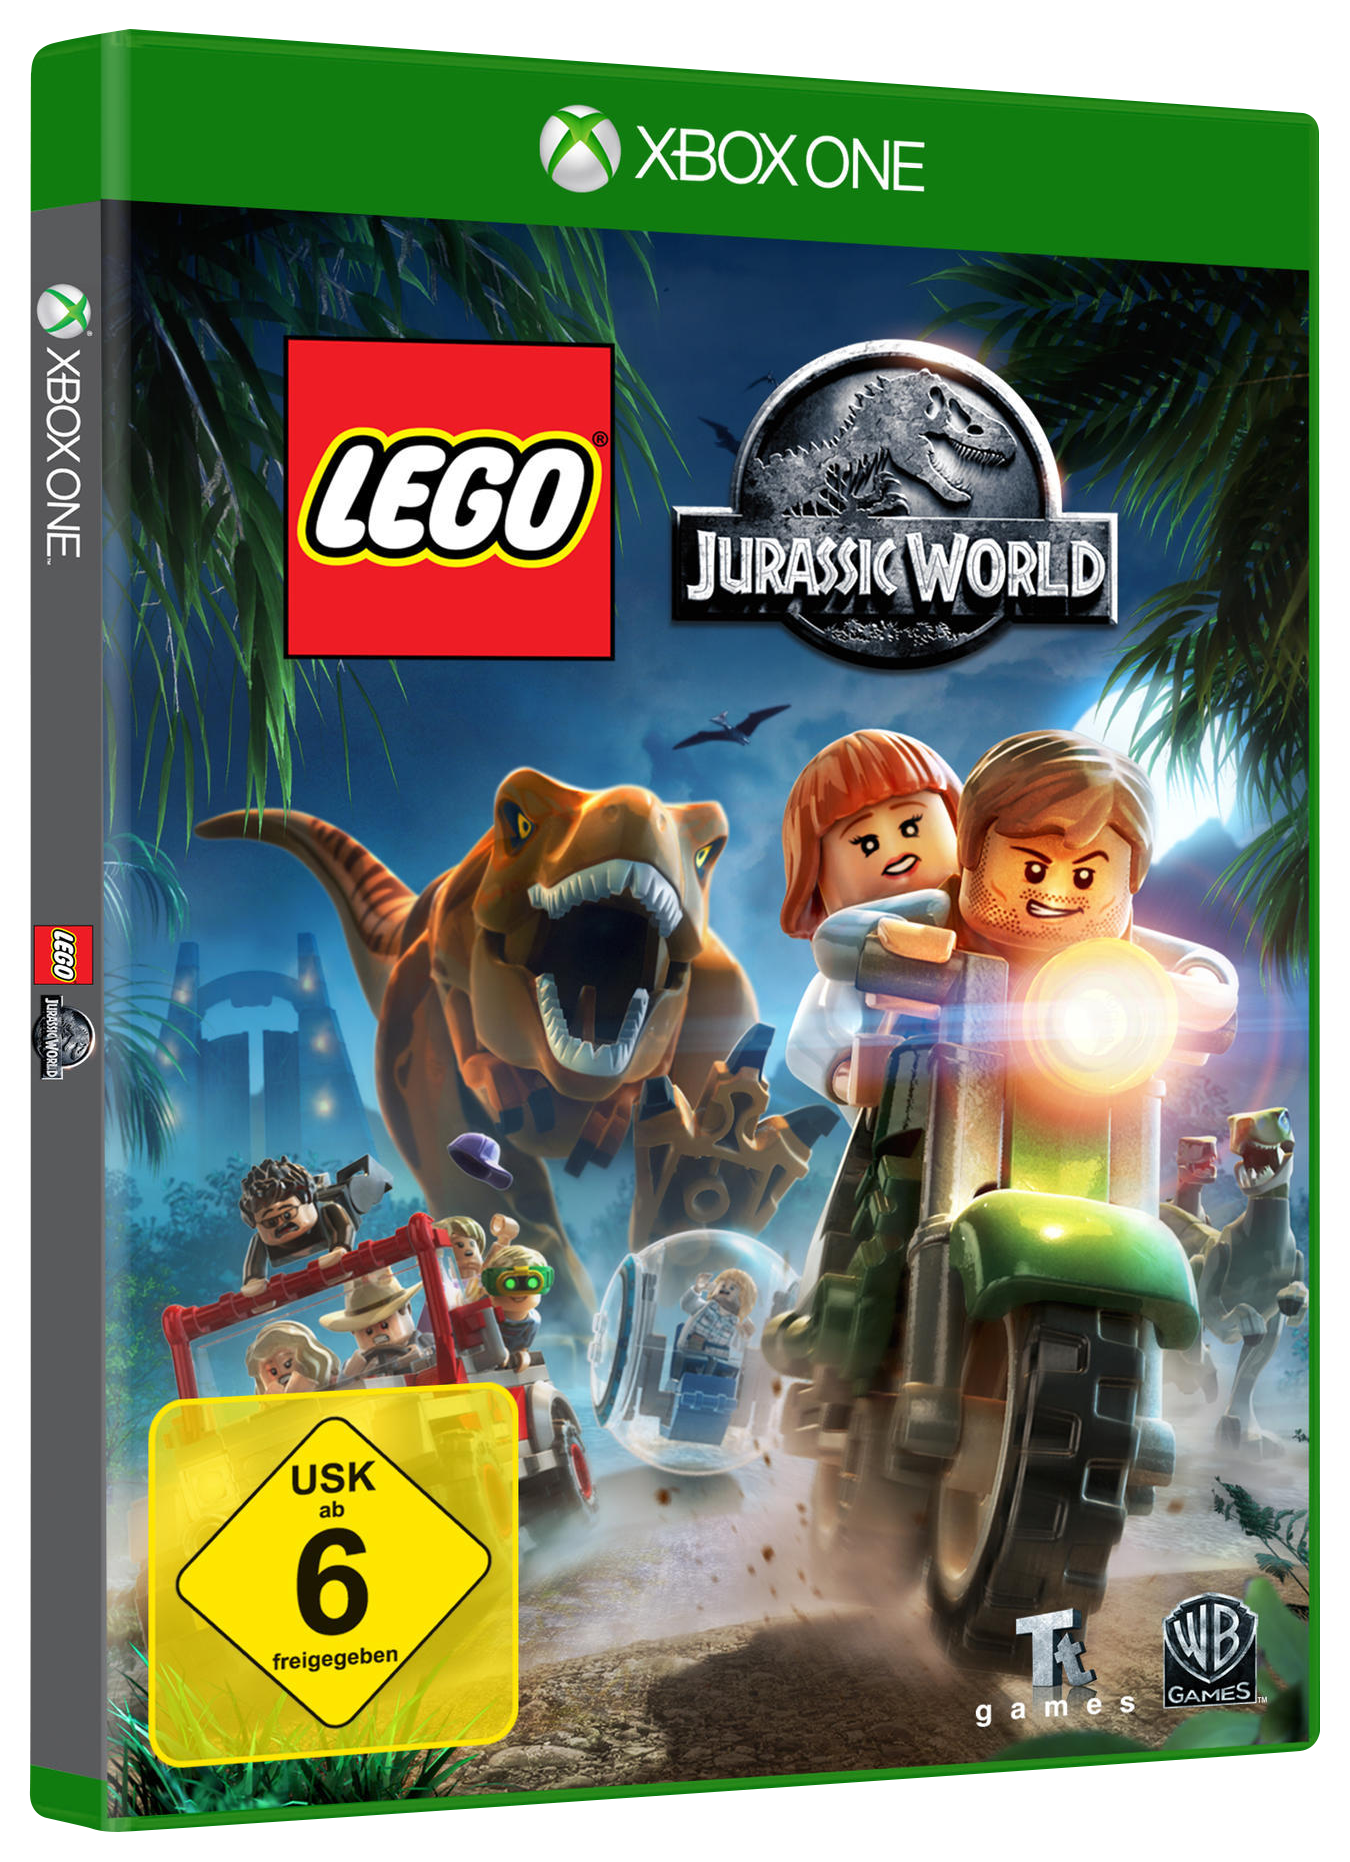 Jurassic World LEGO [Xbox One] -